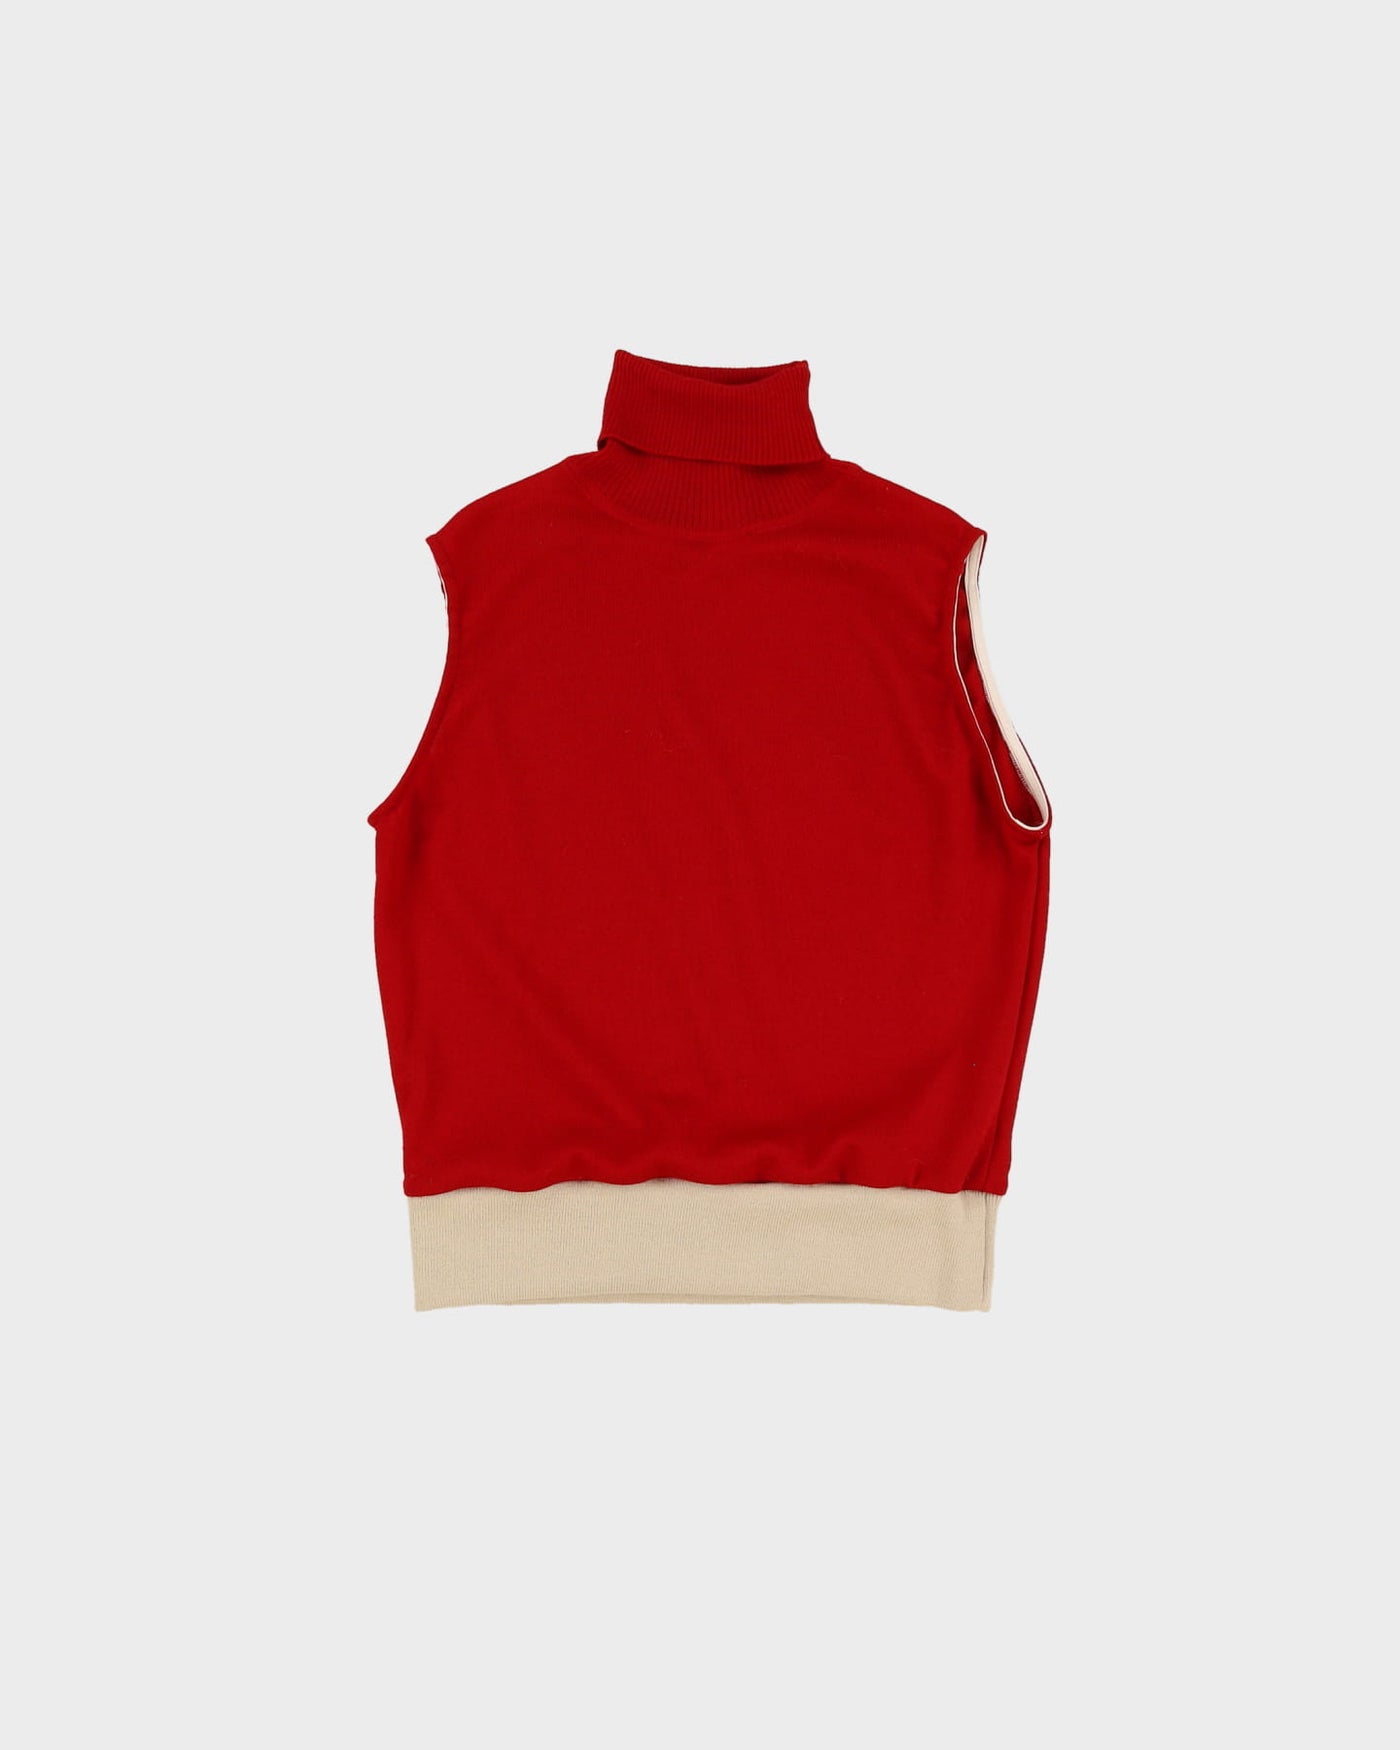 Rokit Originals Red Sweater Vest - S